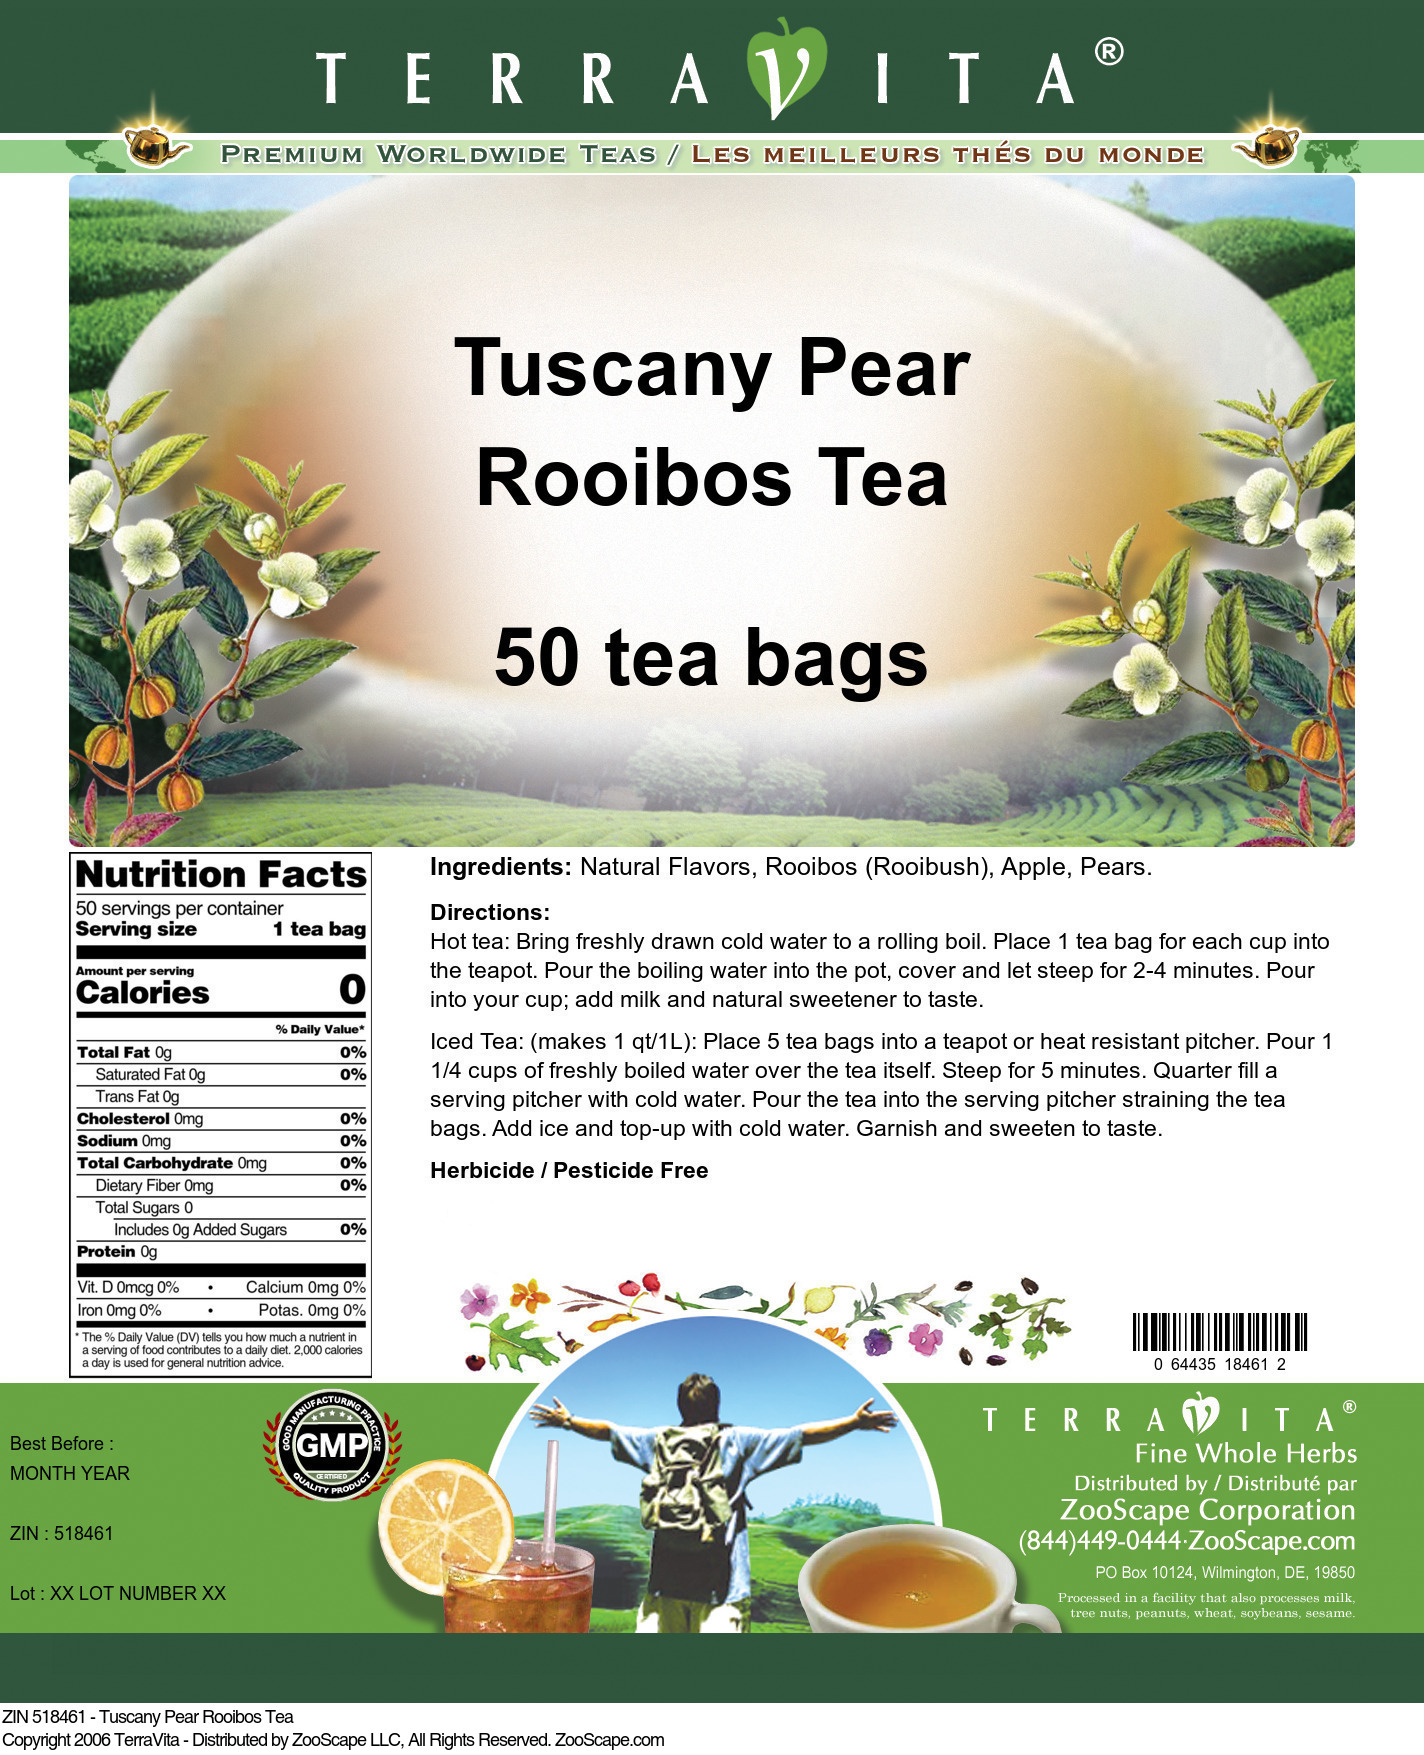 Tuscany Pear Rooibos Tea - Label